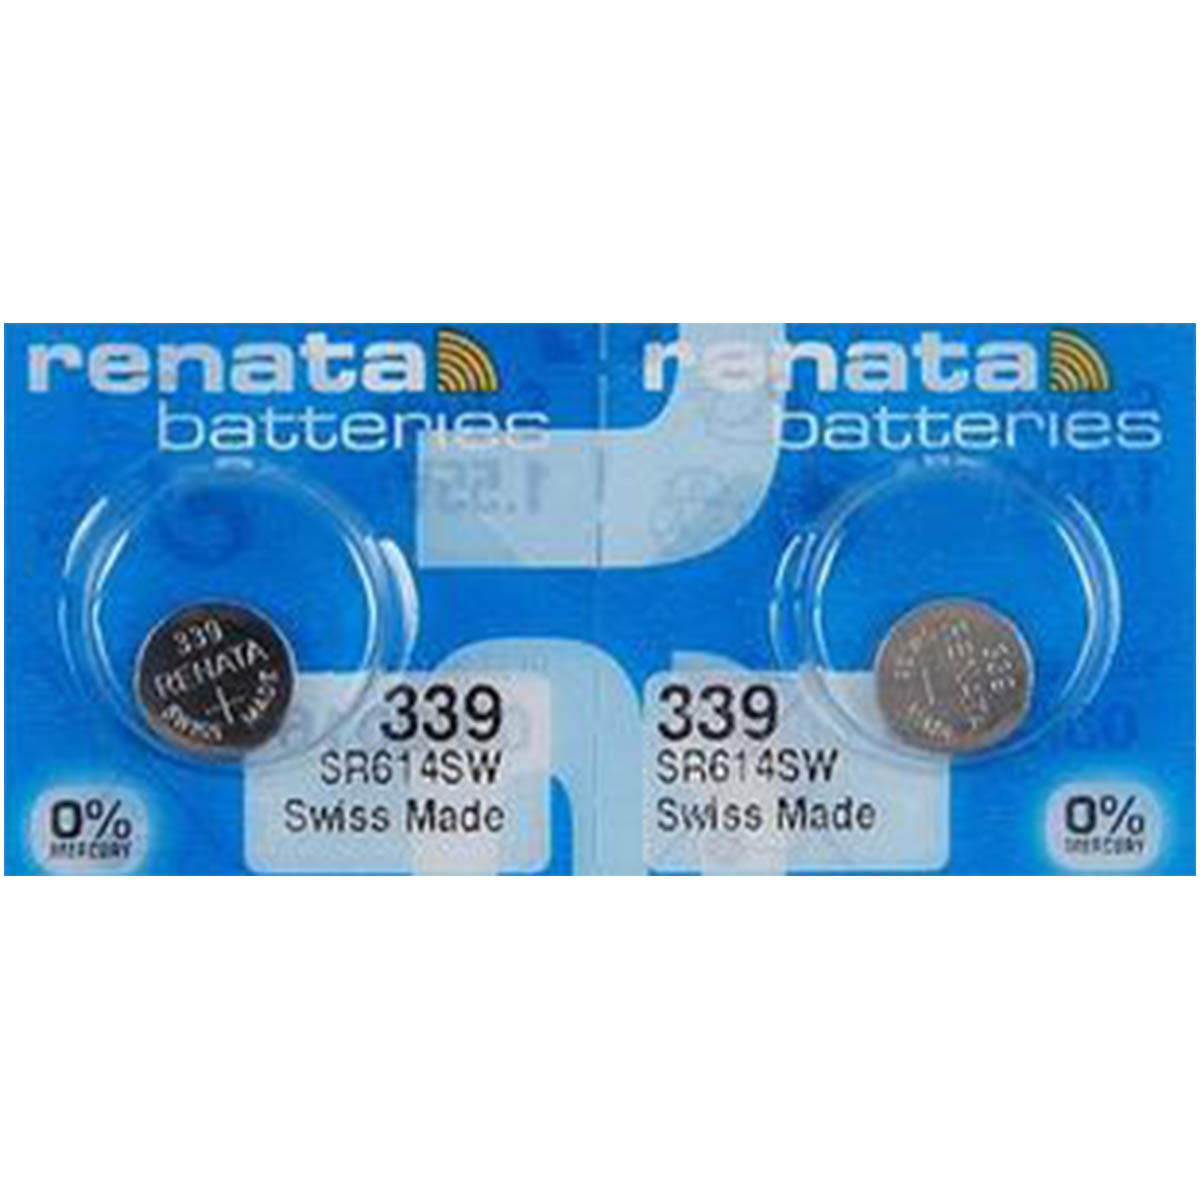 Renata 339 SR614SW Batteries 1 Pc 